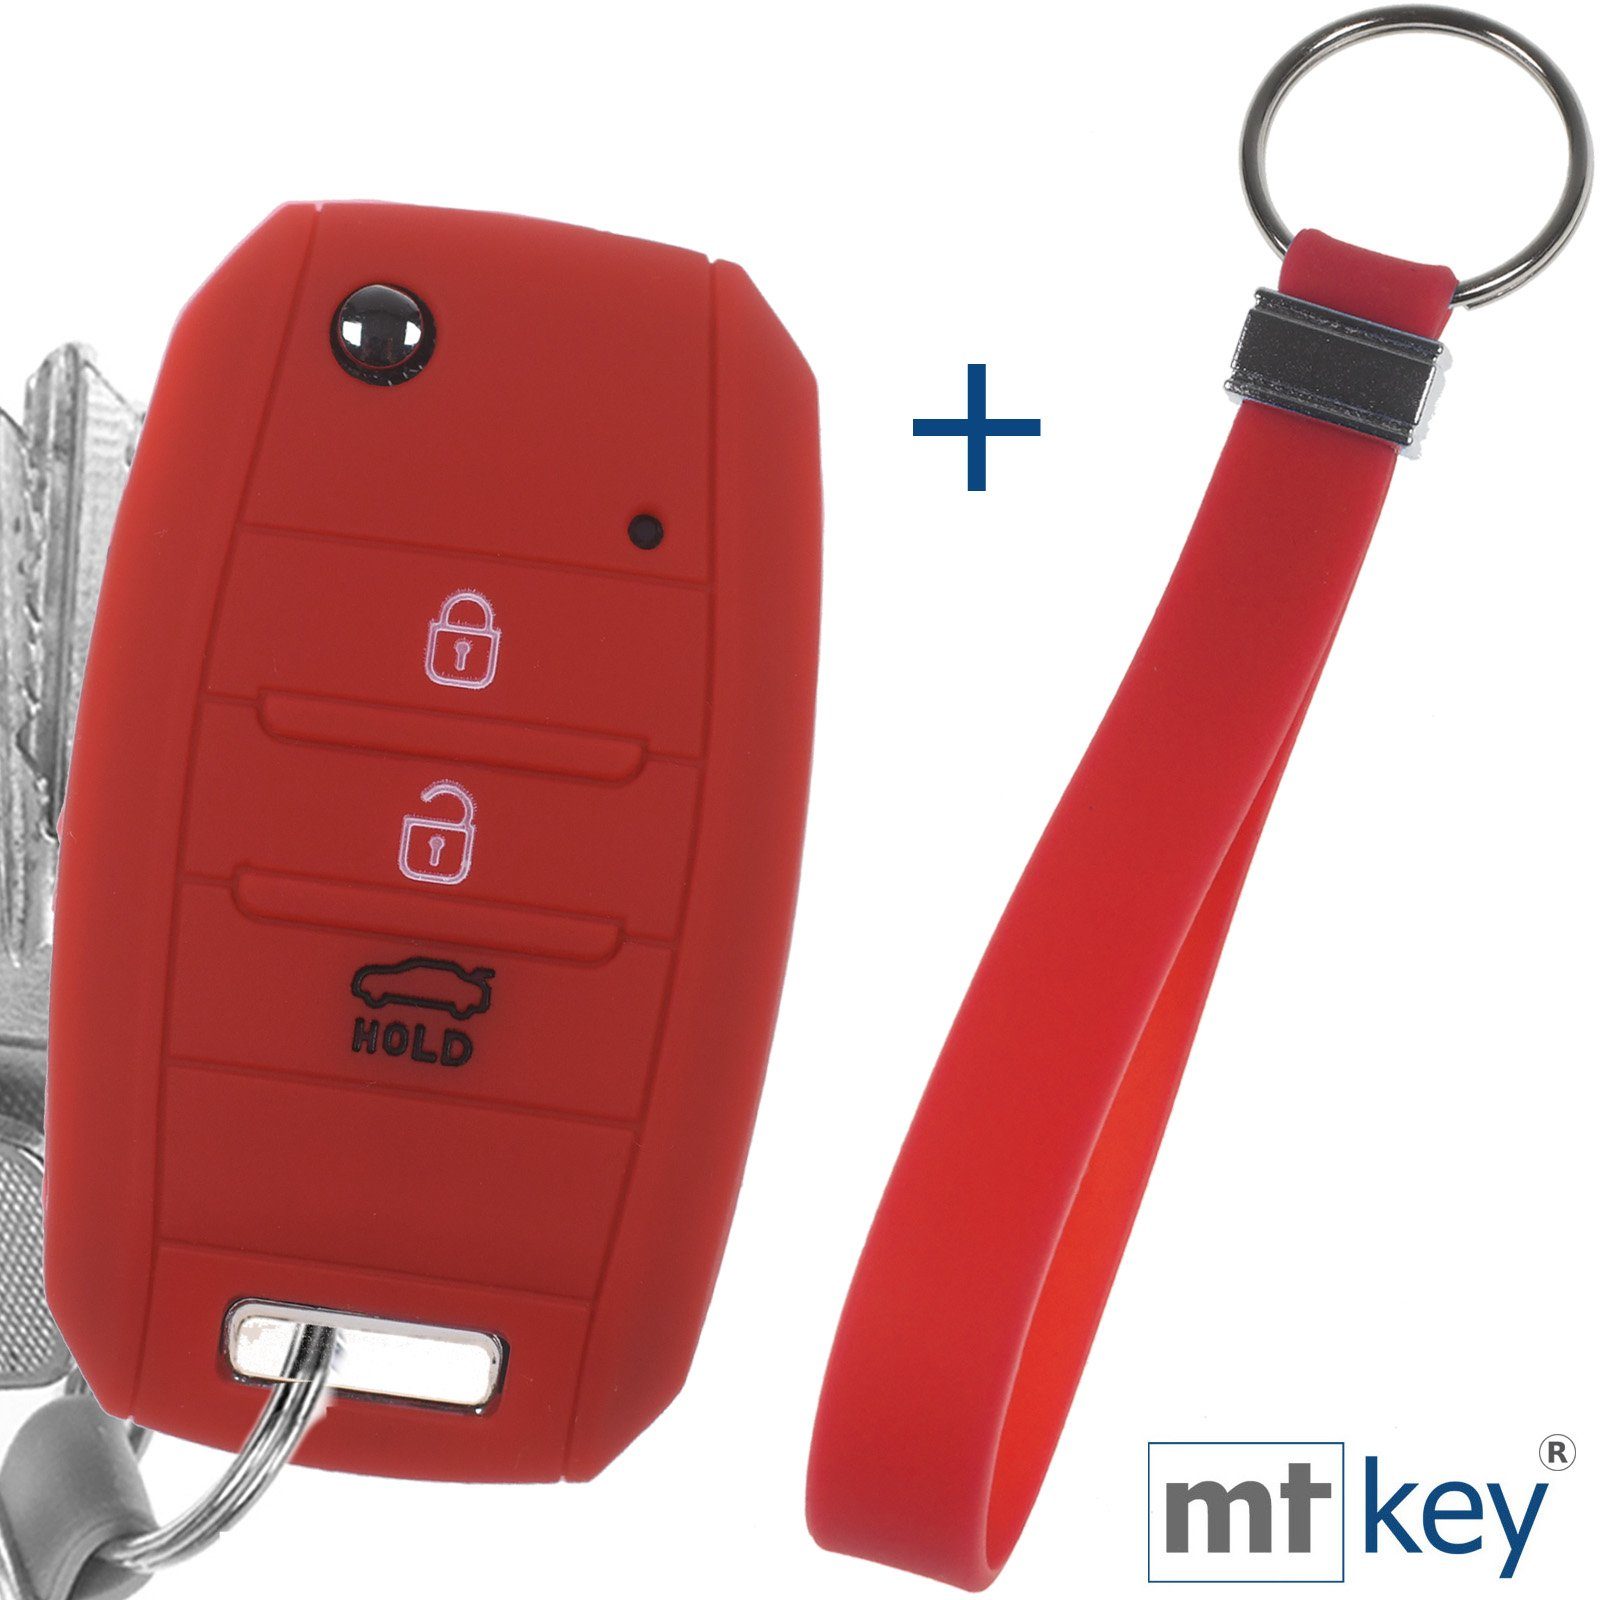 mt-key Schlüsseltasche Autoschlüssel Softcase Silikon Schutzhülle Rot mit Schlüsselband, für KIA Picantio Rio Ceed Soul Sportage Stonic Carens 3 Tasten